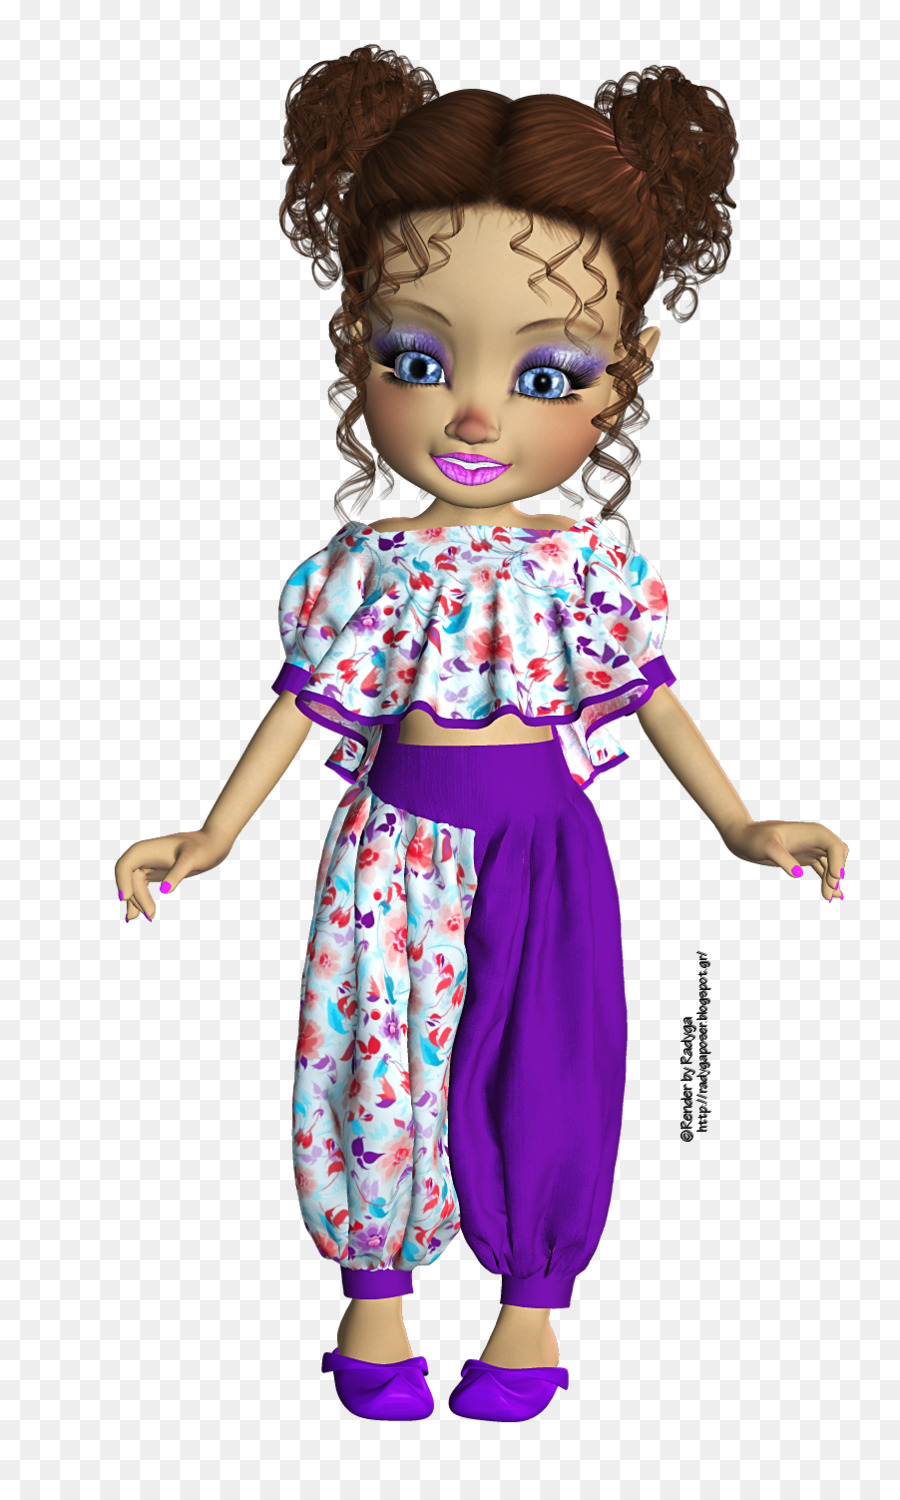 Barbie Kleinkind Animierte cartoon-Charakter-Fiction - Barbie